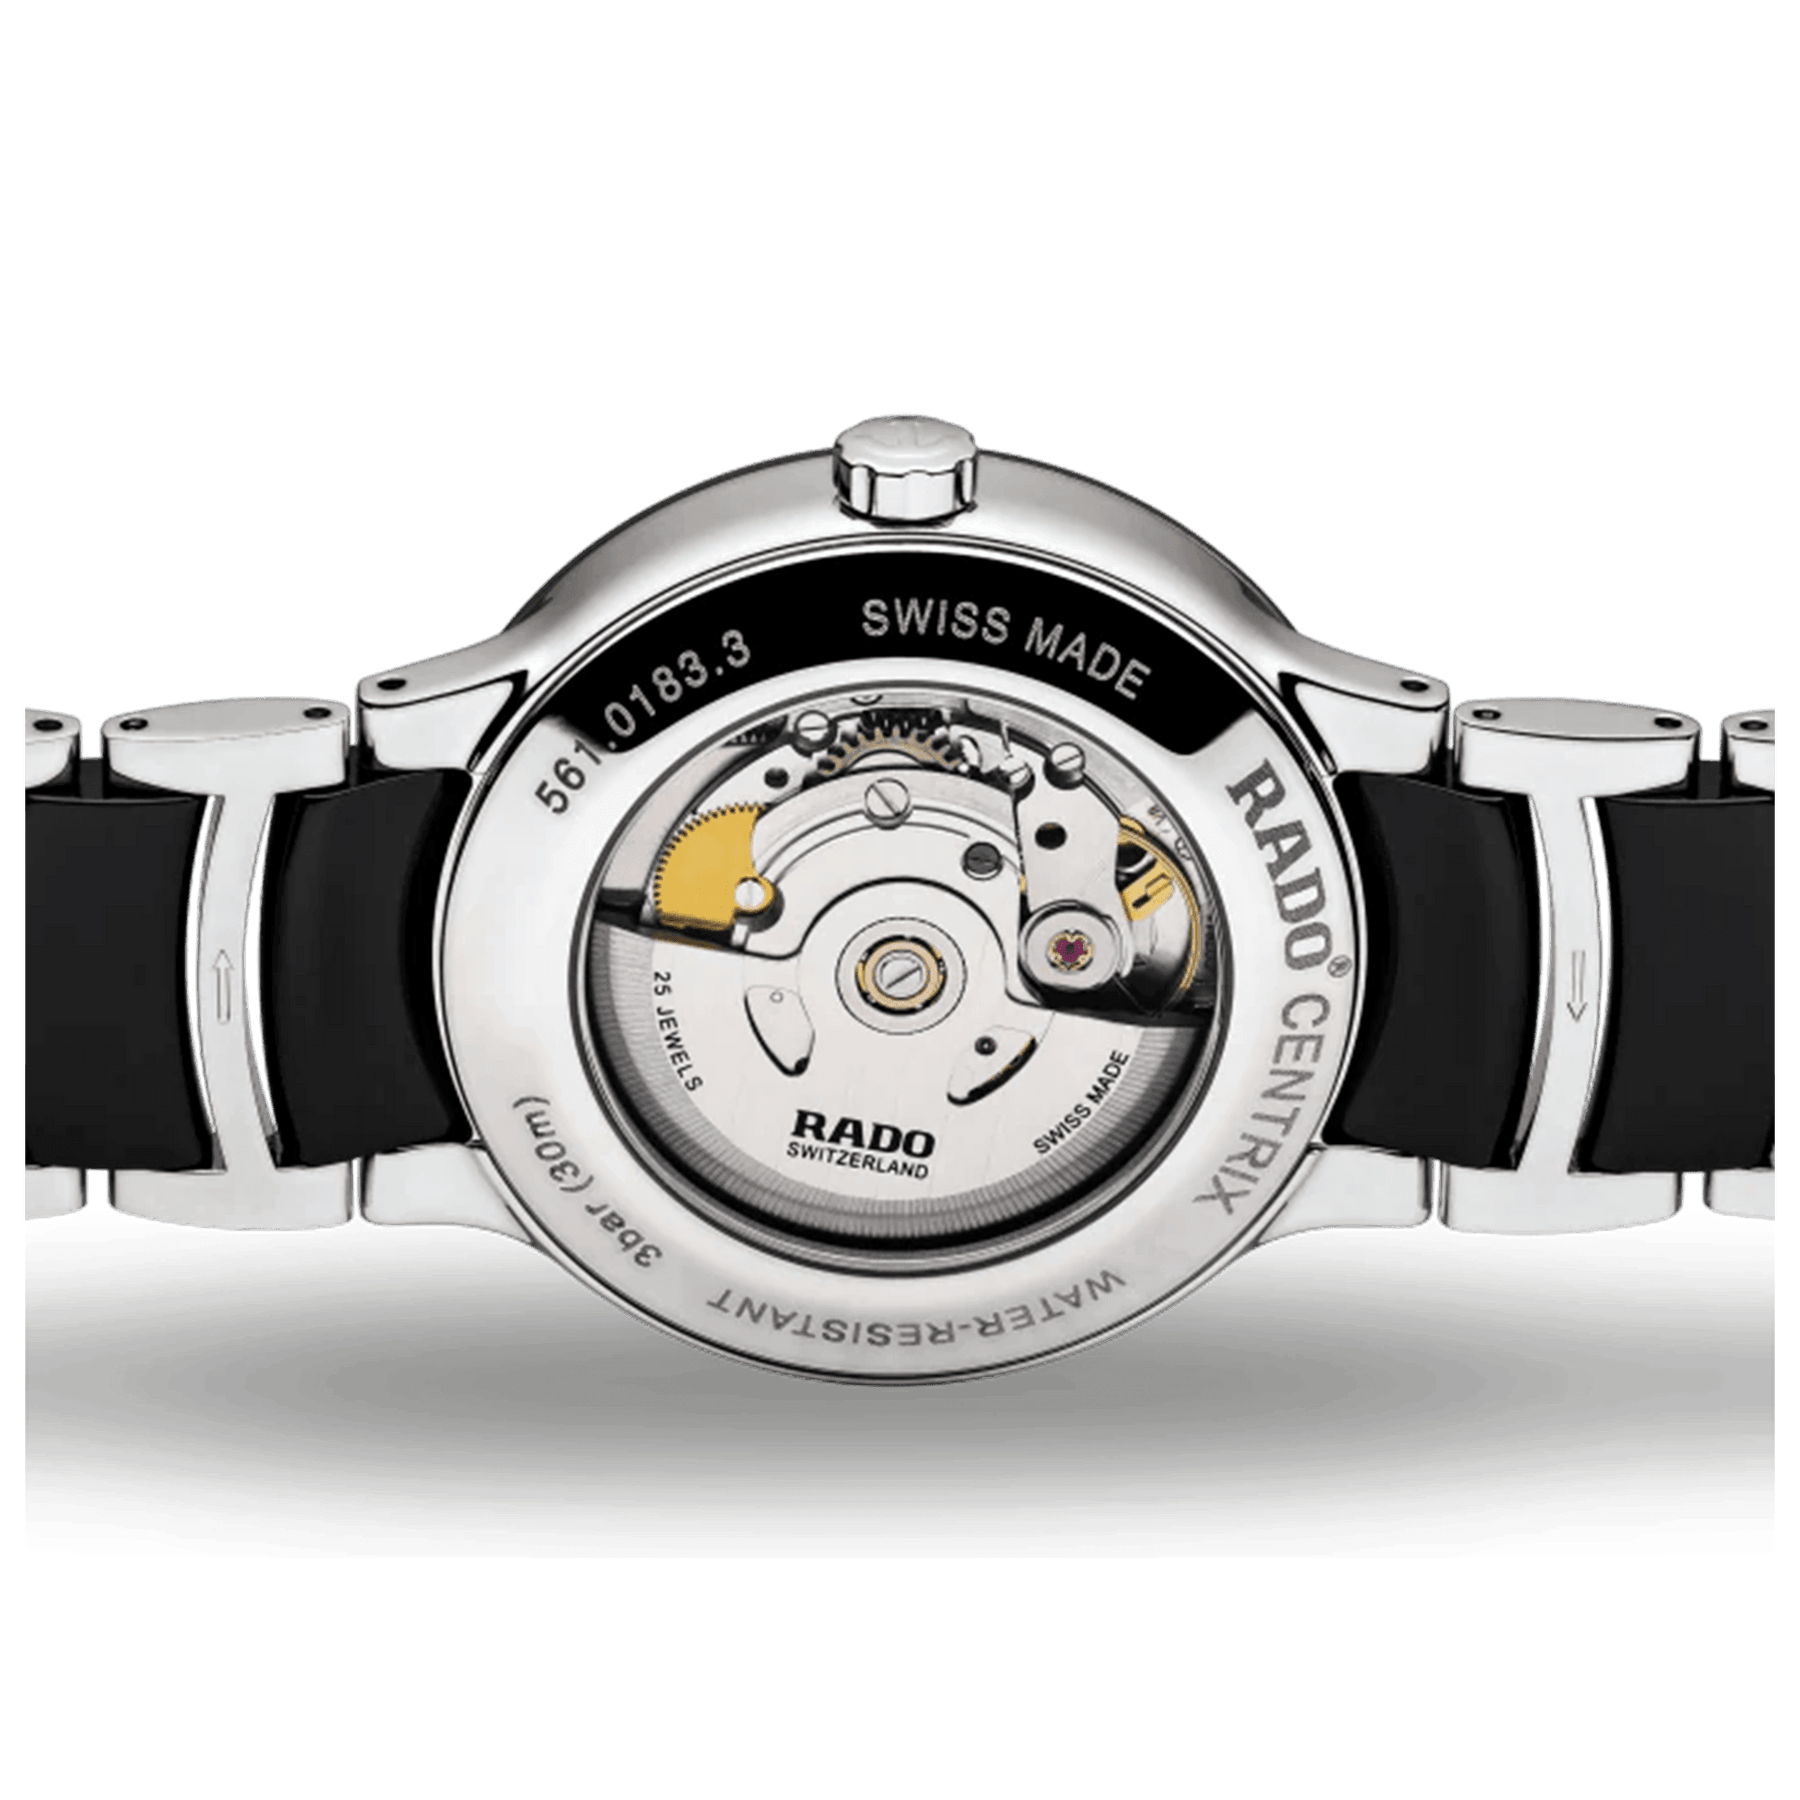 Rado Centrix Men's 38mm Ceramic & Stainless Steel Automatic Watch R30941702 - Wallace Bishop